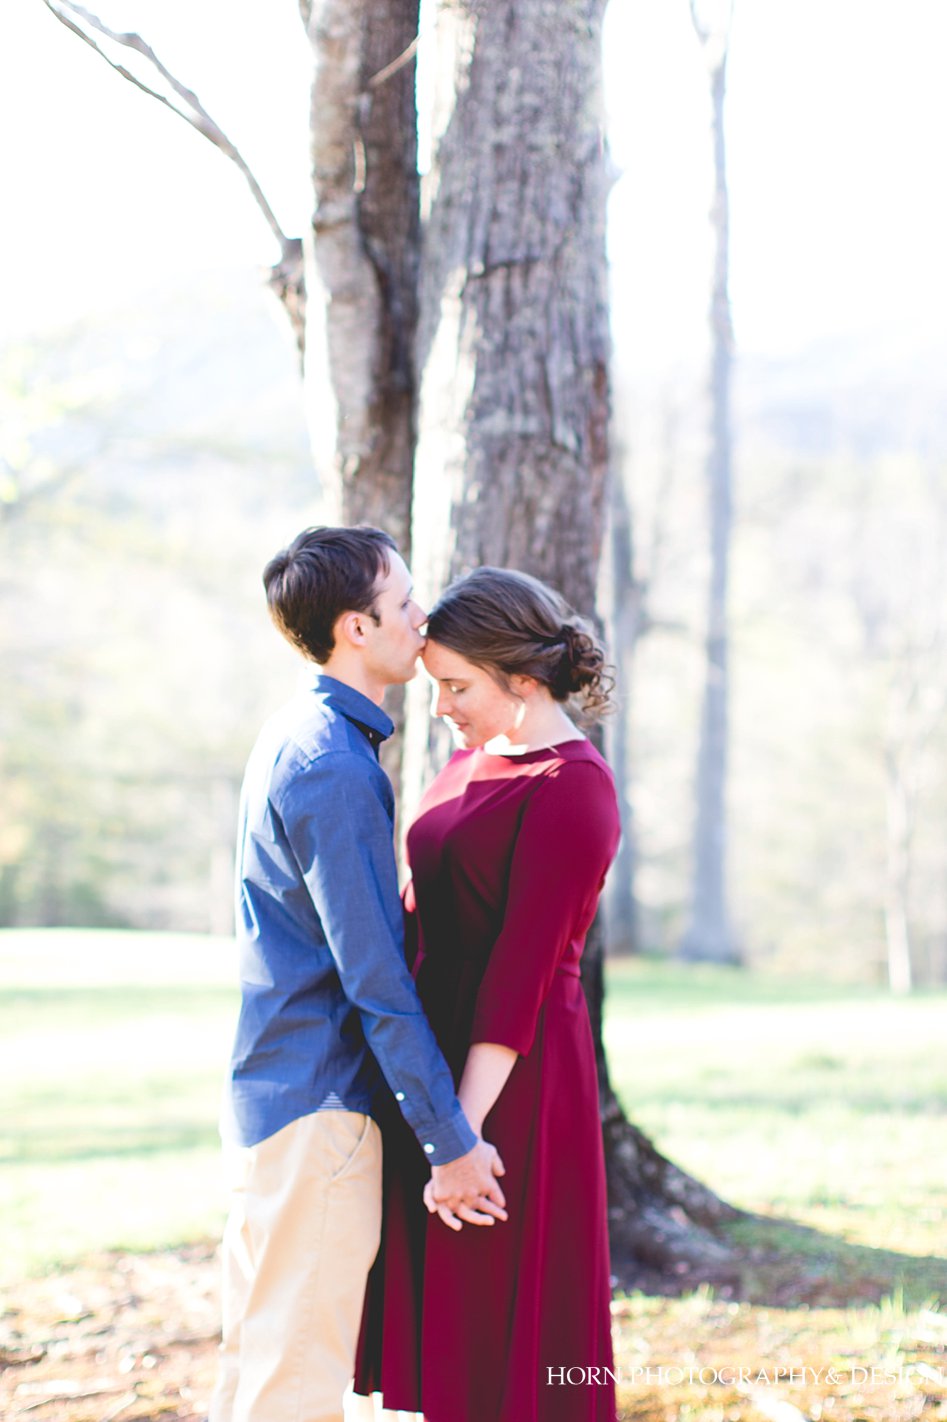 groom kissing bride forehead in front of tree Dahlonega, GA